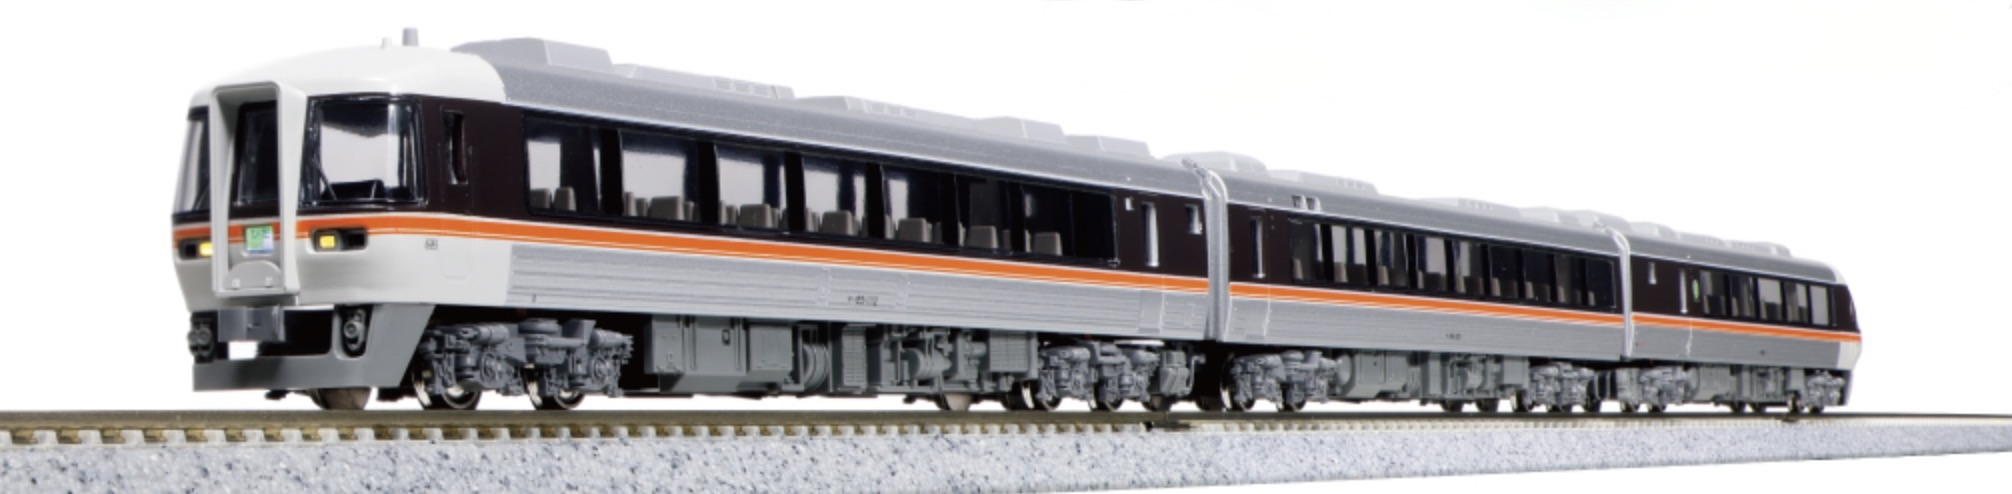 N Scale - Kato - 10-1887 - Diesel, Passenger DMU, Class KIHA85 - Japan Railways Central - 3 Car Add-On Set